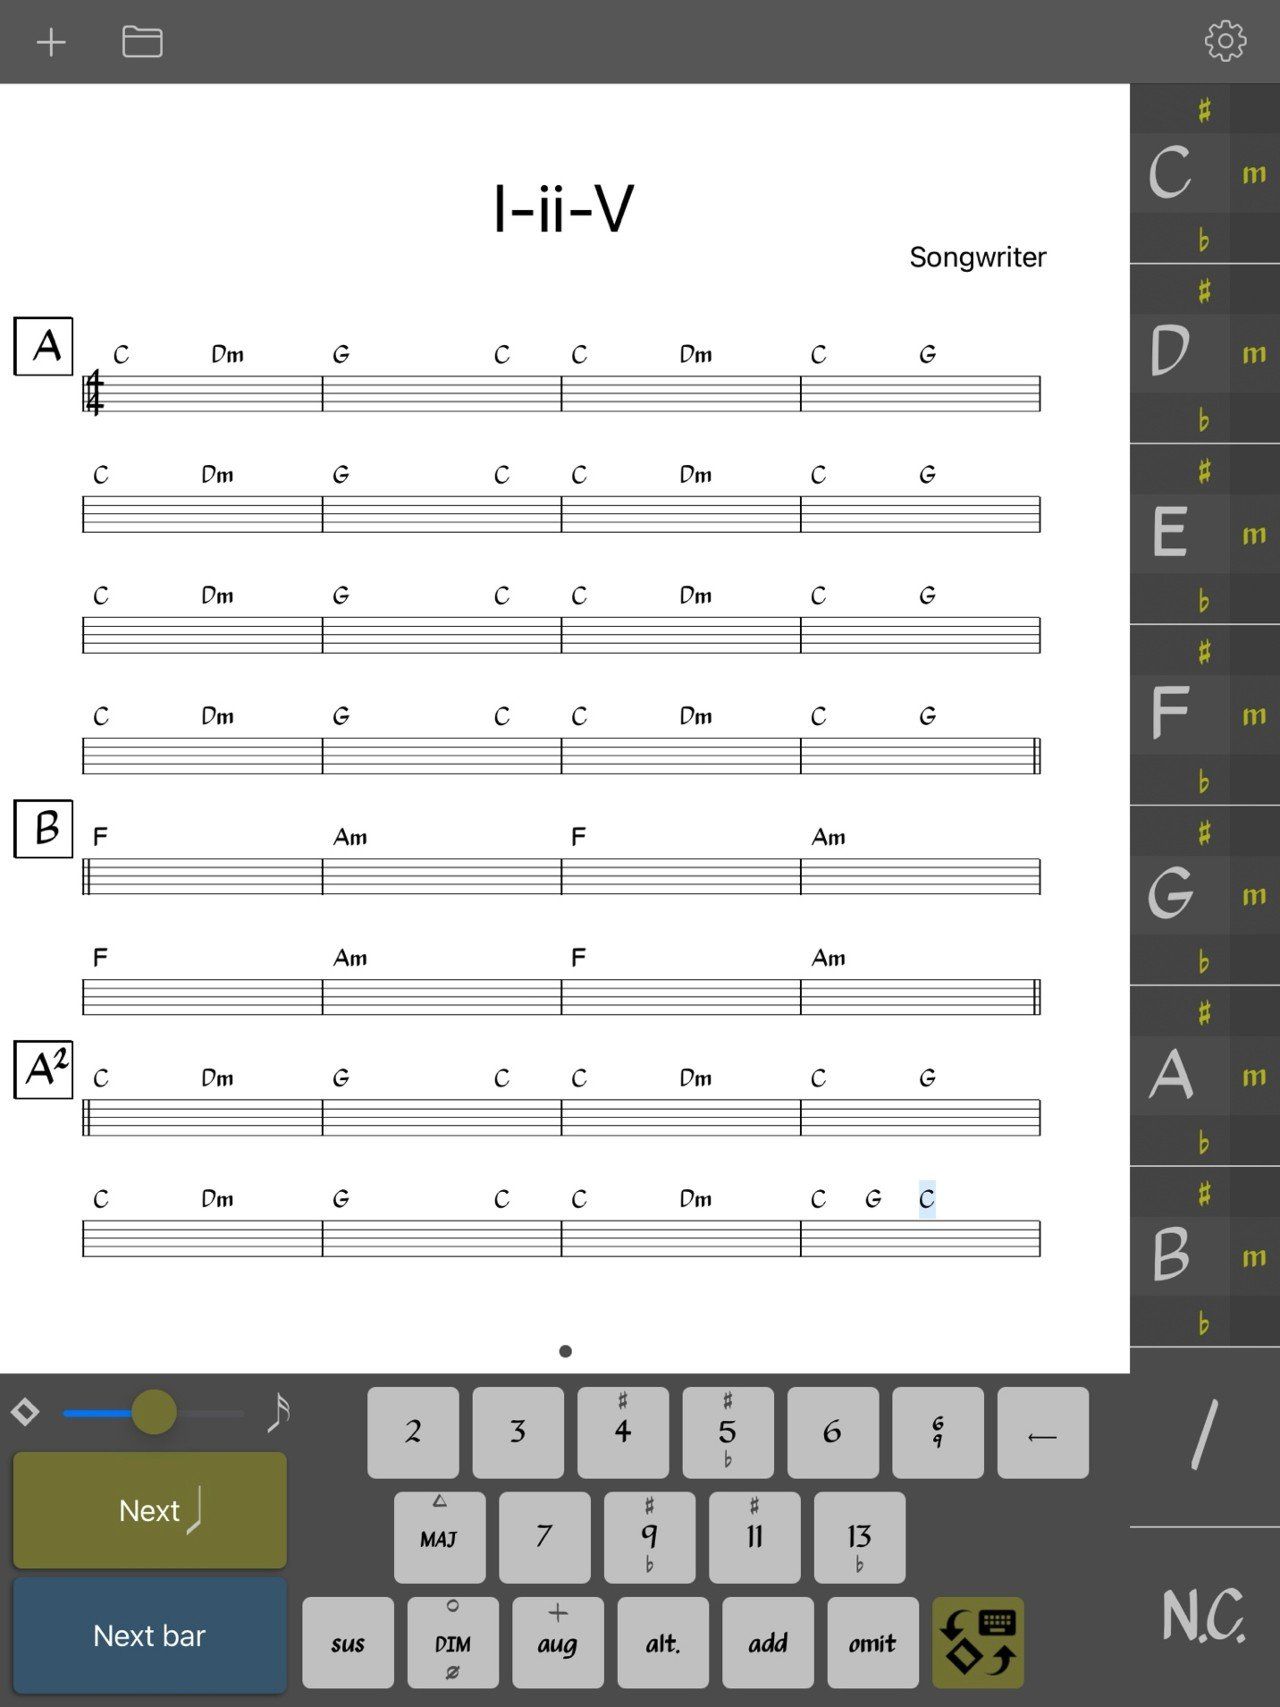 I-ii-V chord progression example